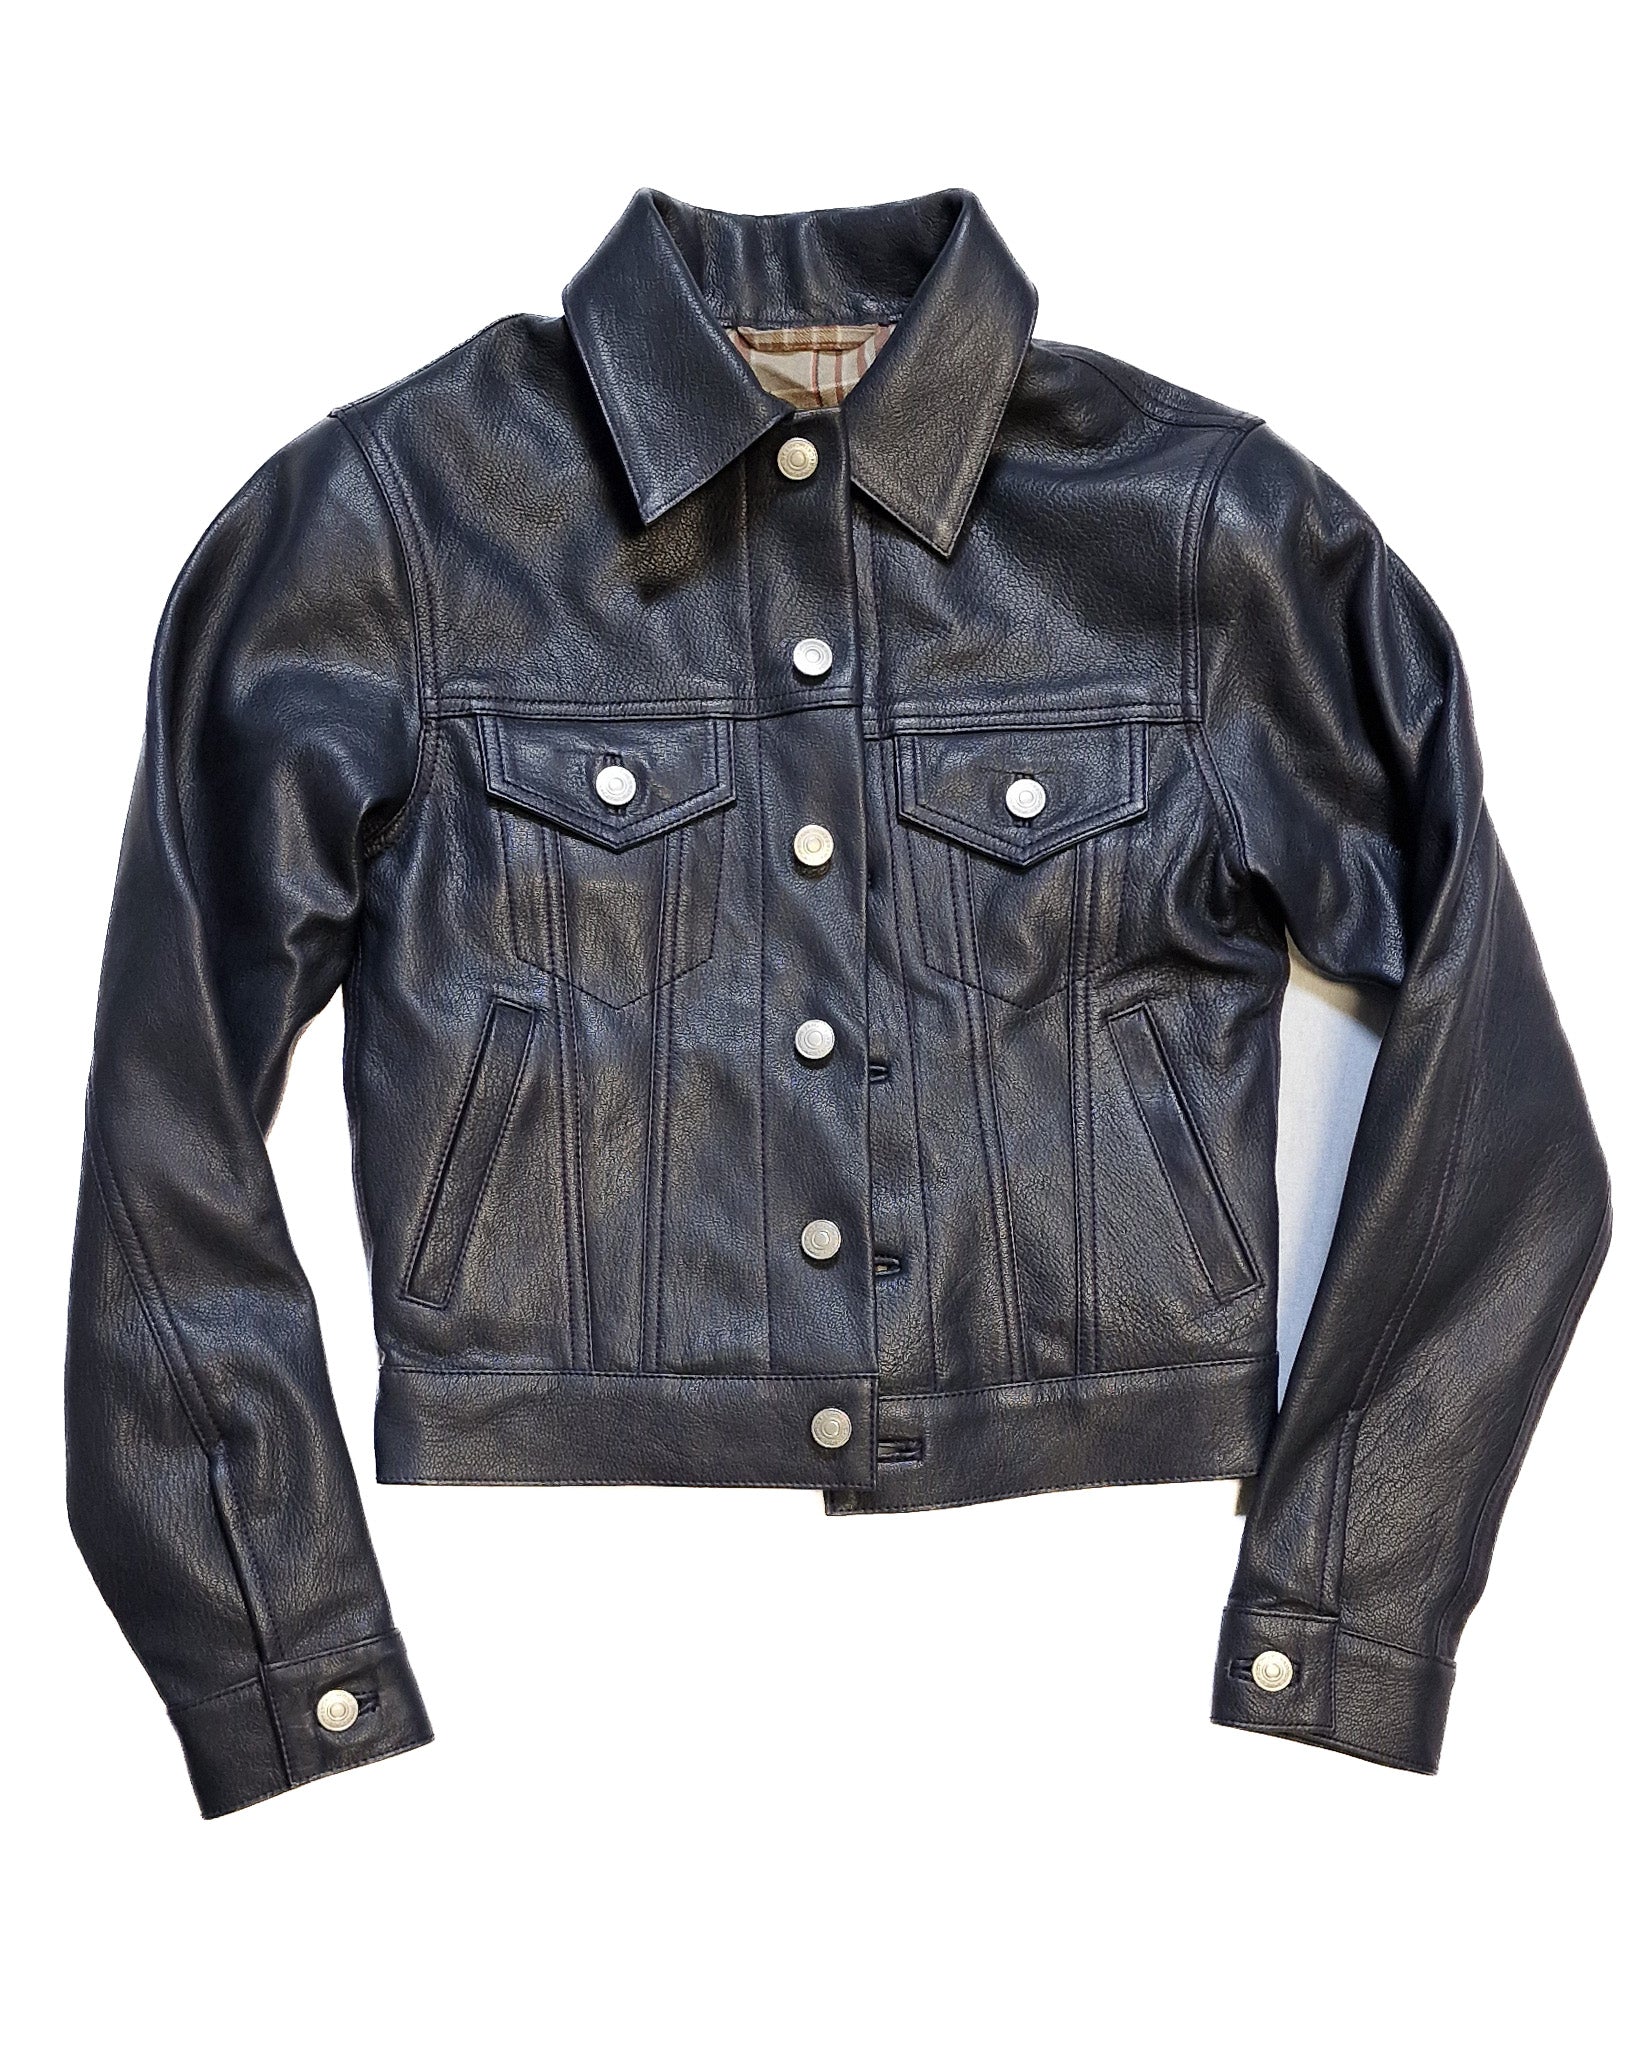 Sample Midnight Leather Jacket Size 8